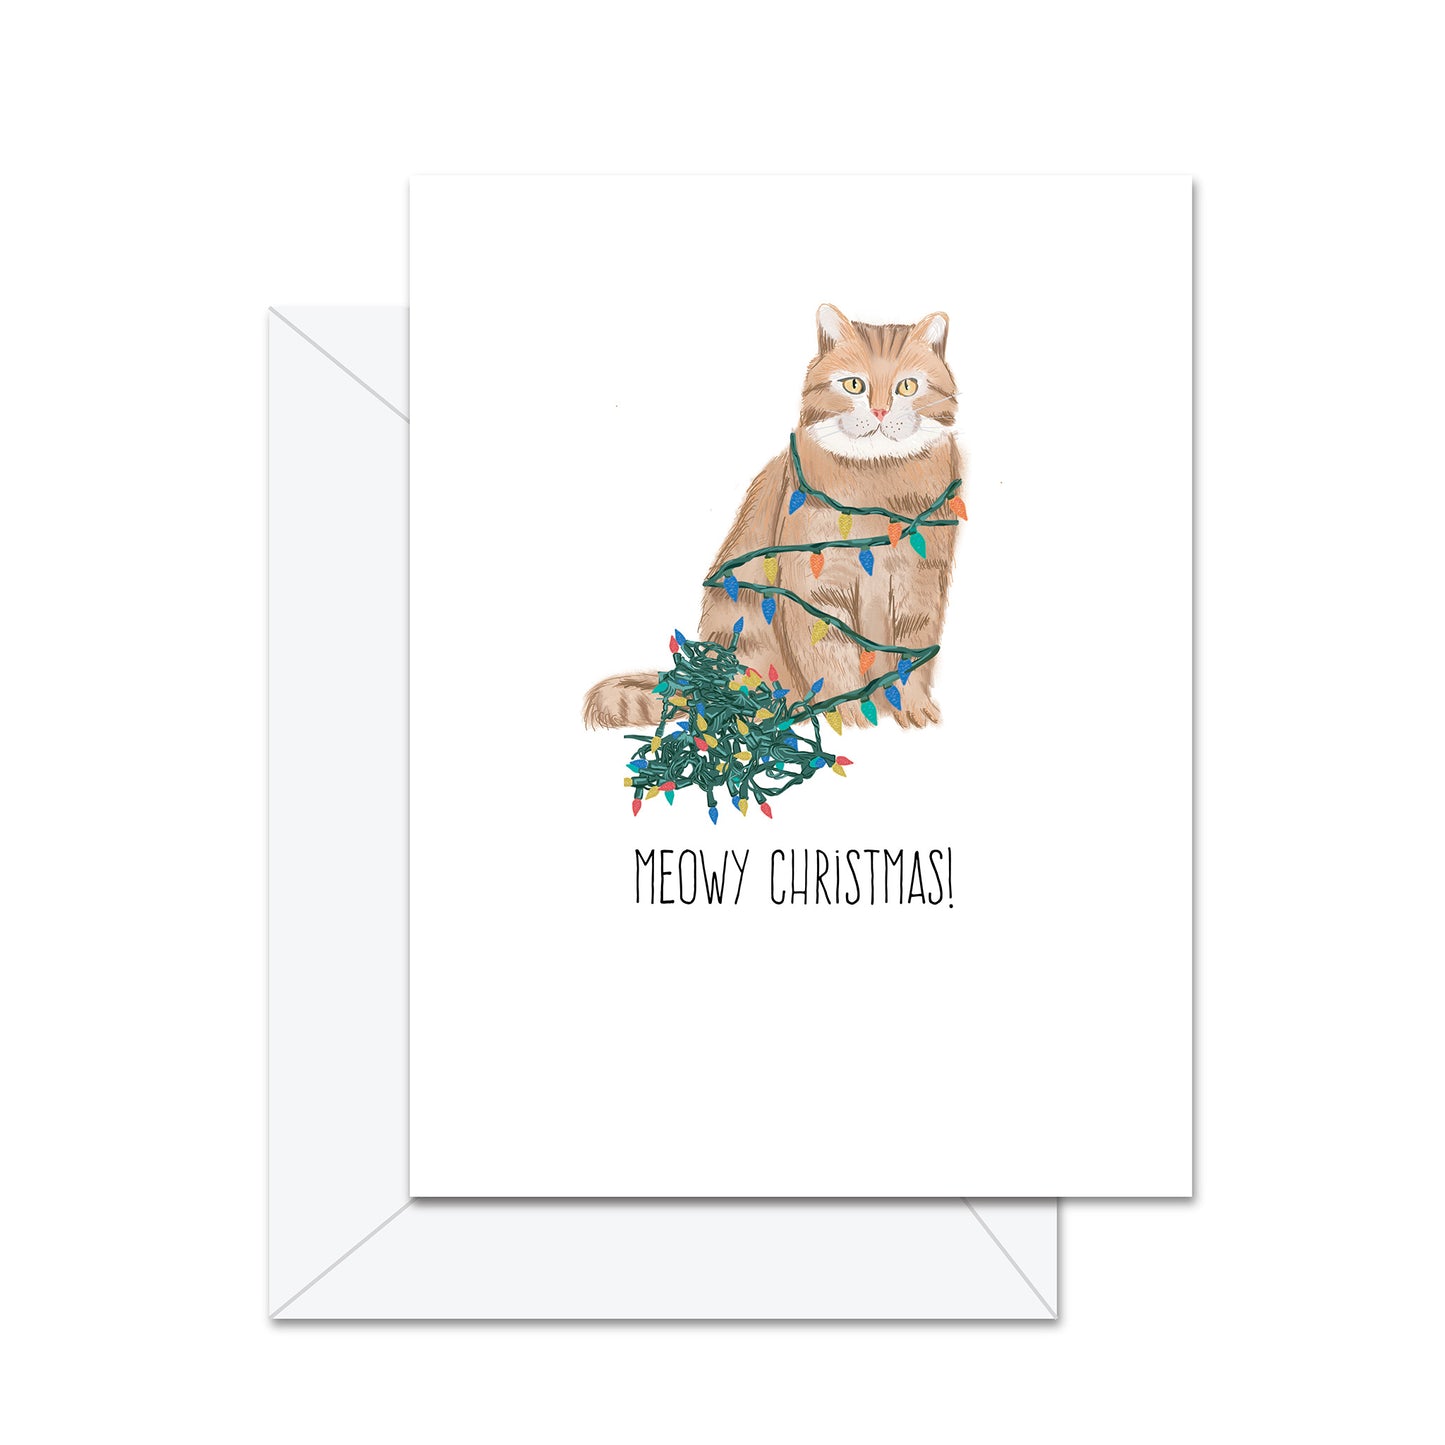 Meowy Christmas - Greeting Card